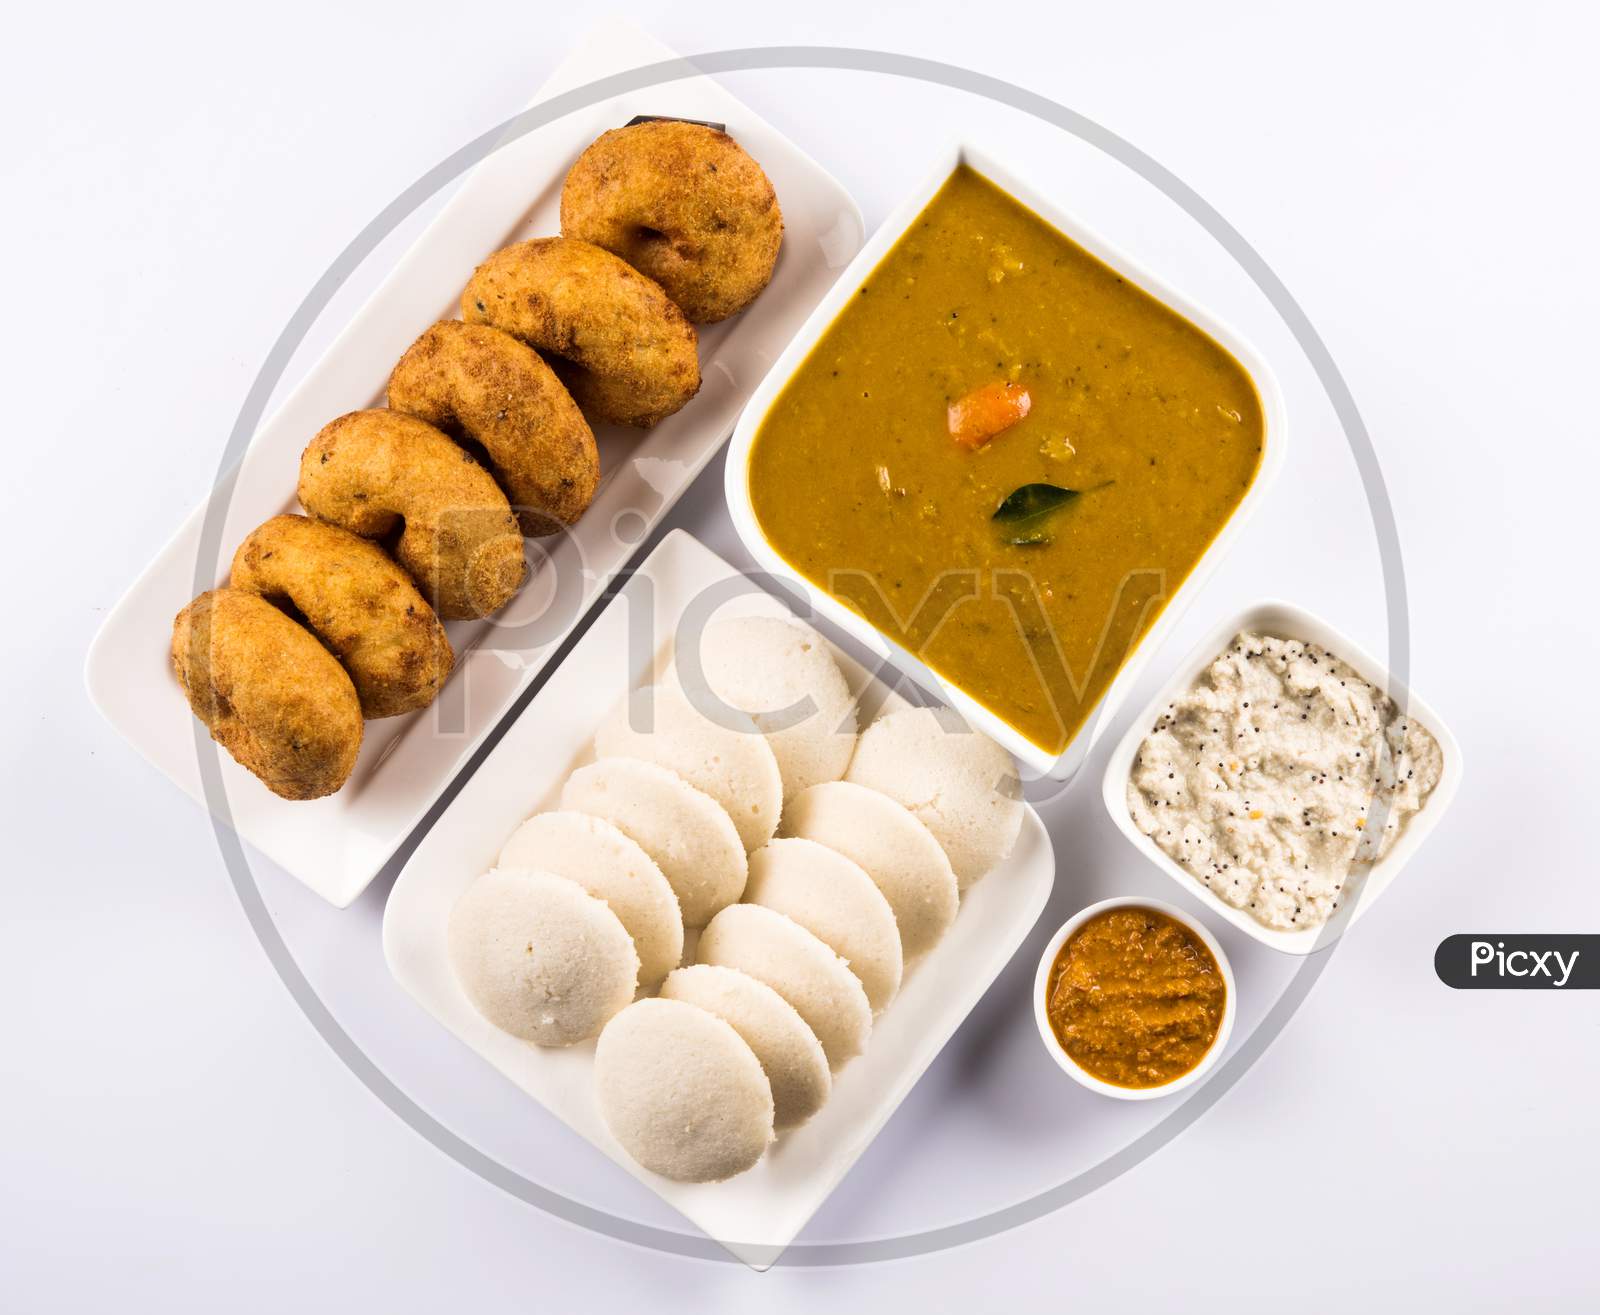 idli, vada with chutney and sambar, south Indian food